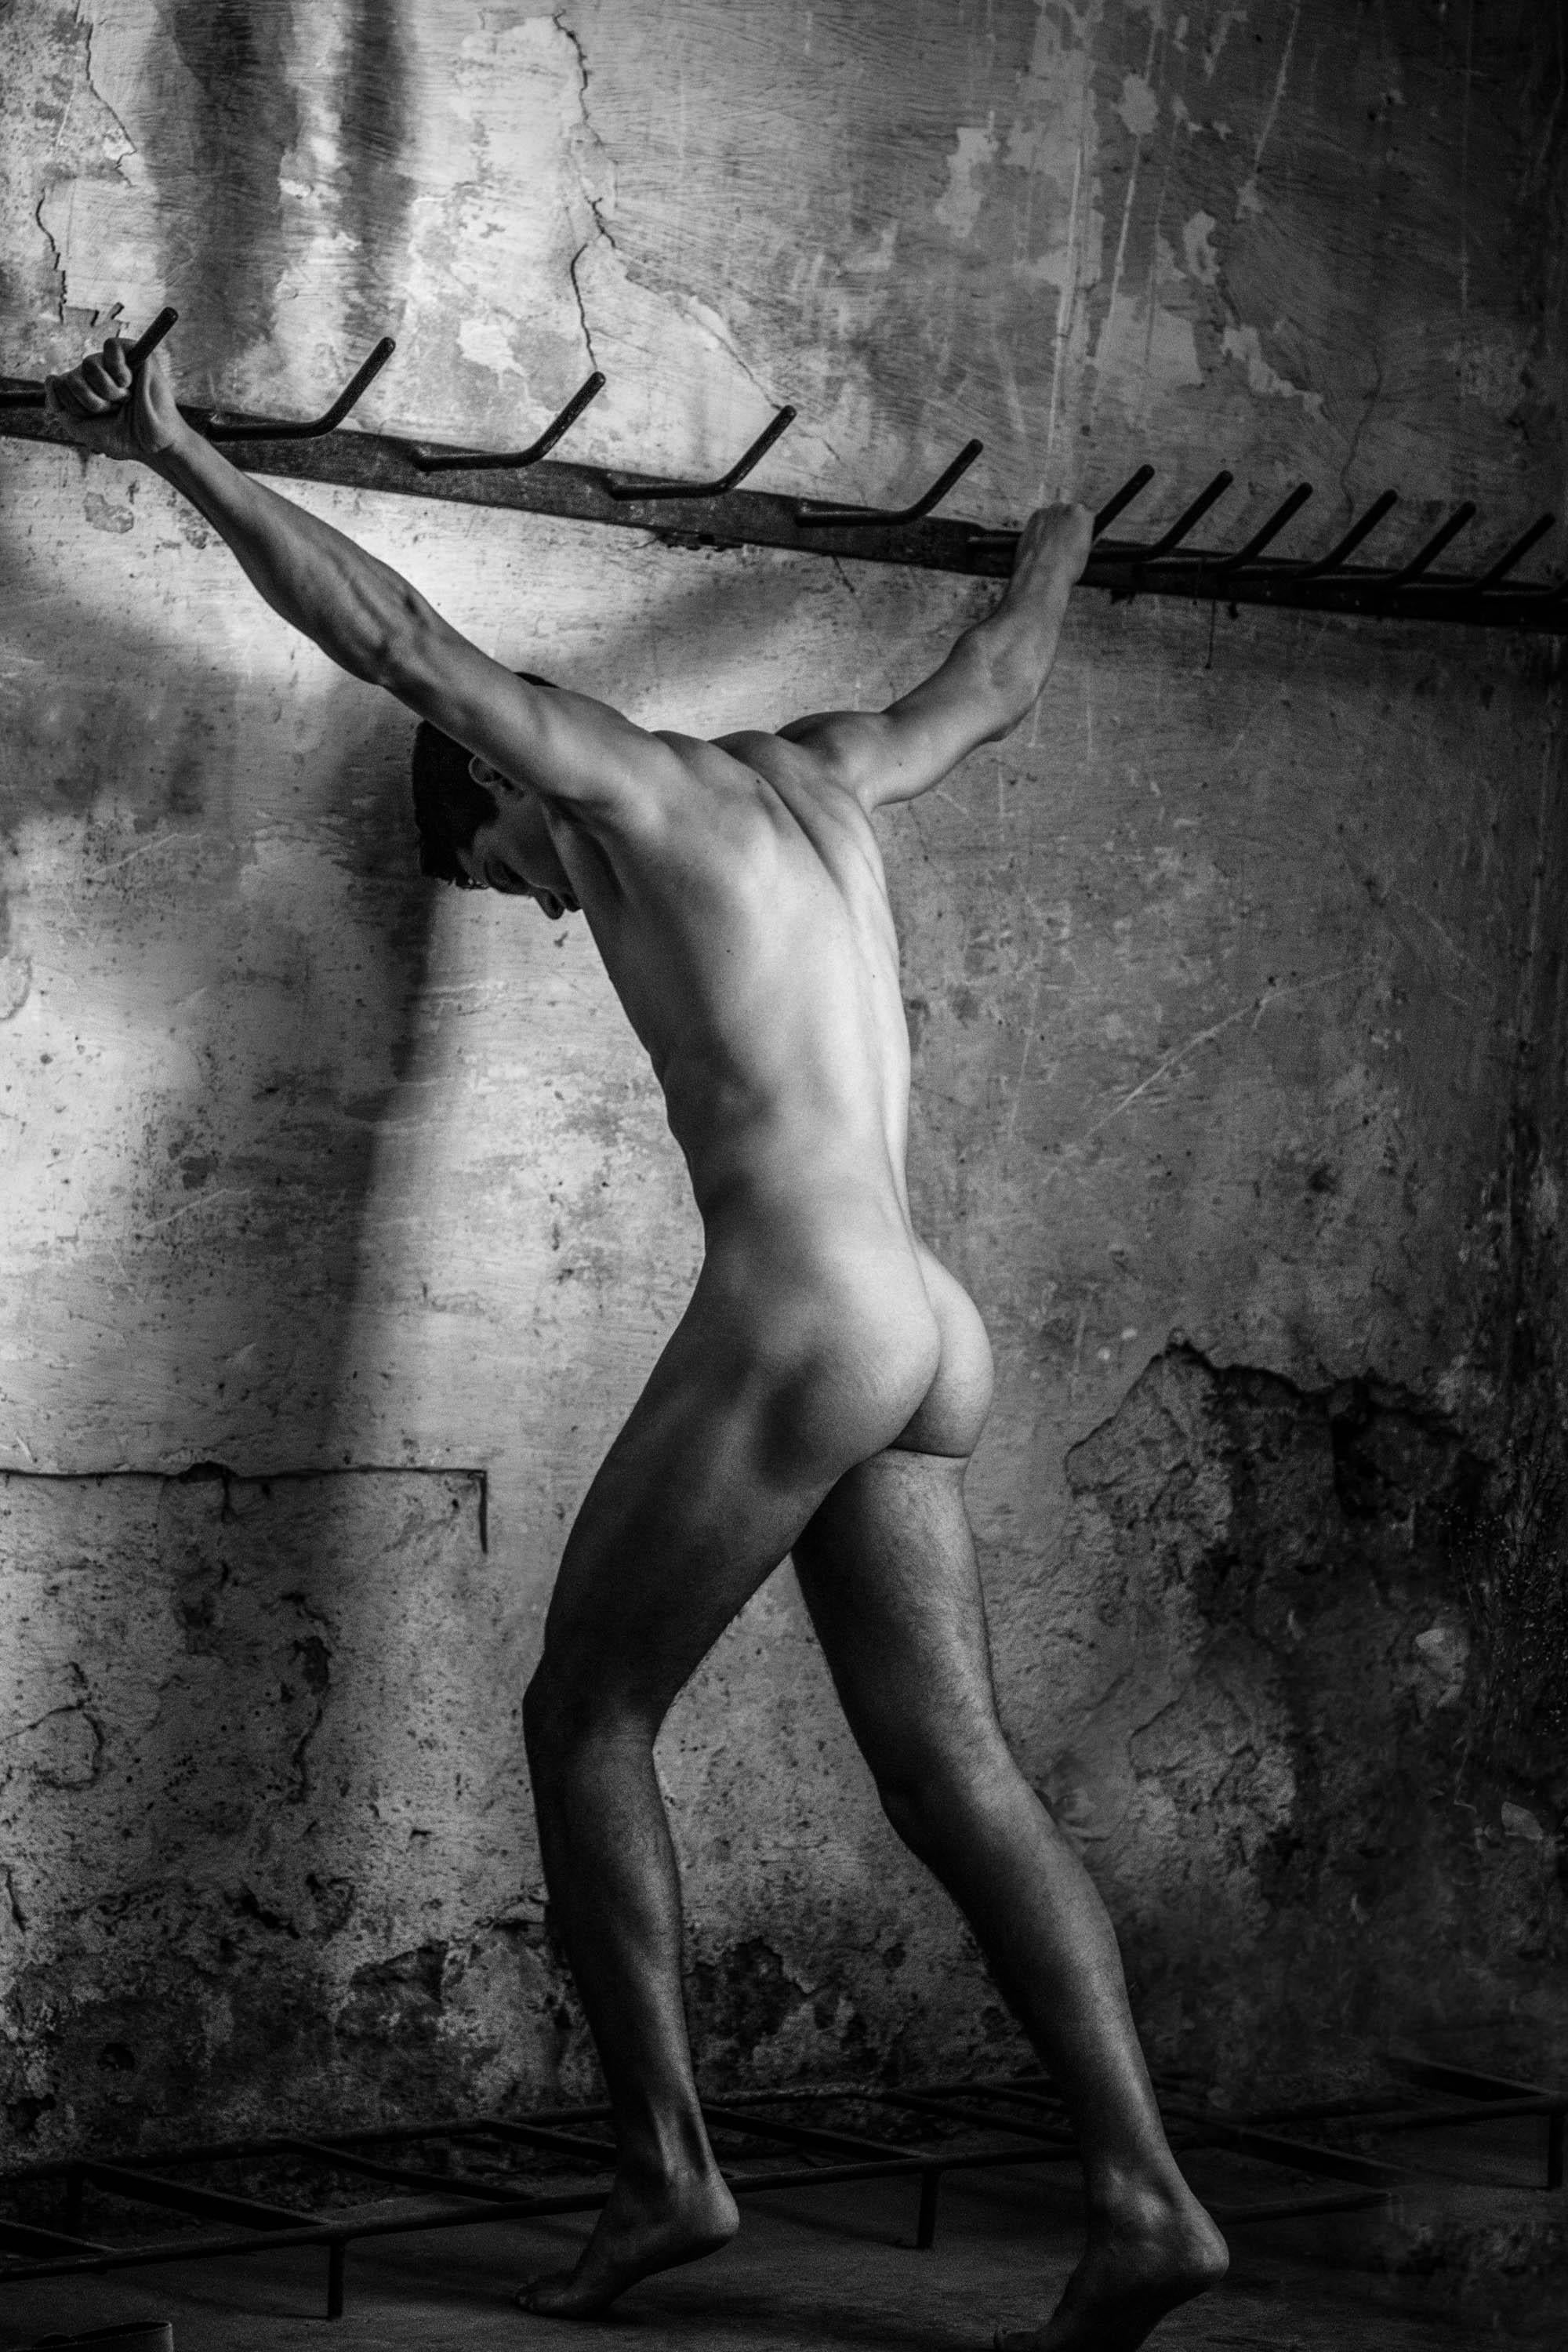 Greg Gorman Nude Photograph - Andrea Moscon, 21st Century, Contemporary, Celebrity, Photography